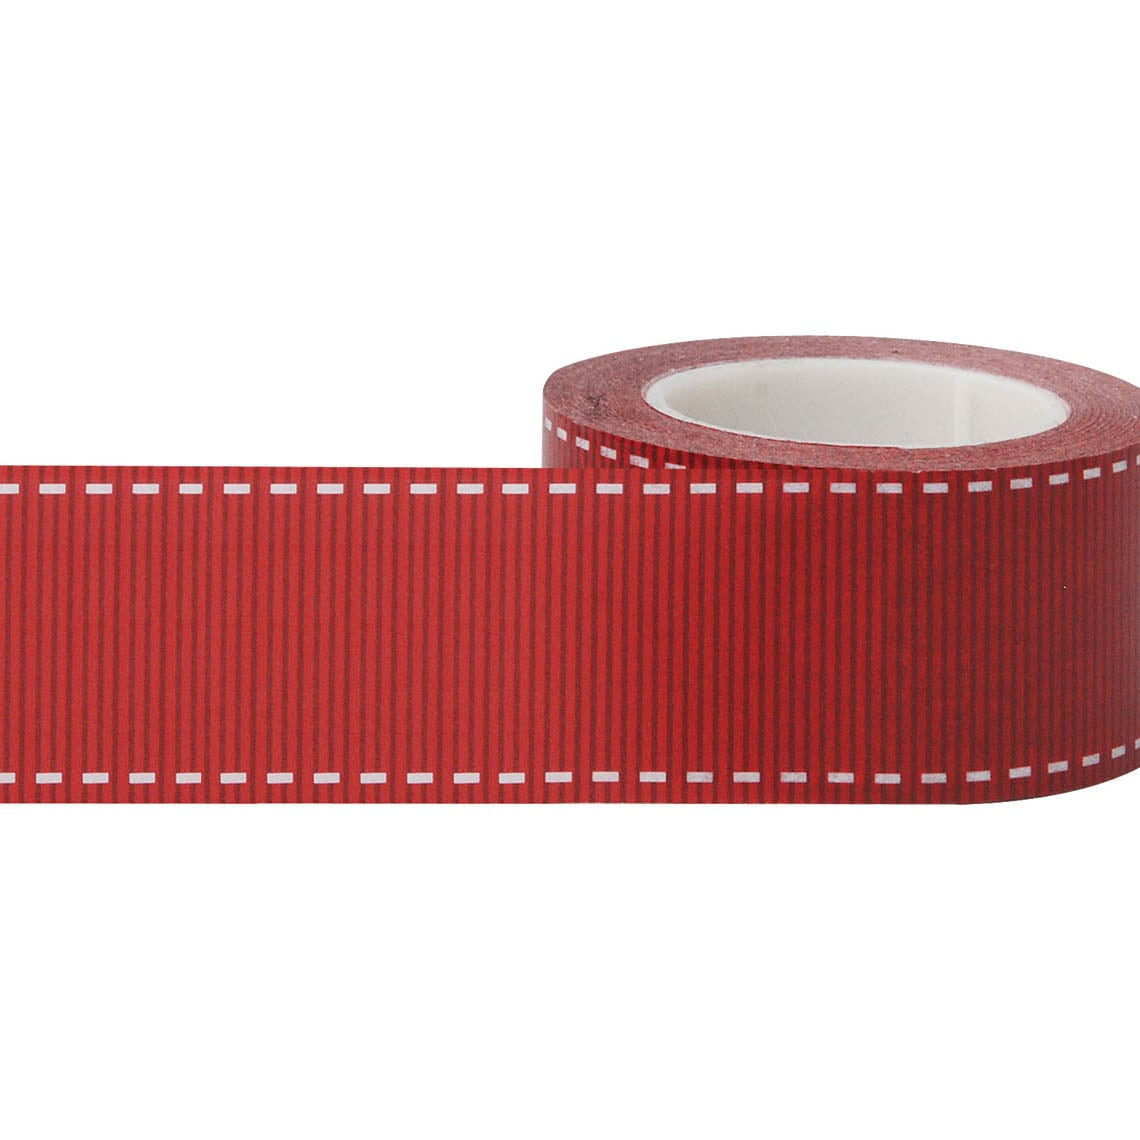 Little B Decorative Paper Tape 25mmx15m wide Red Grosgrain